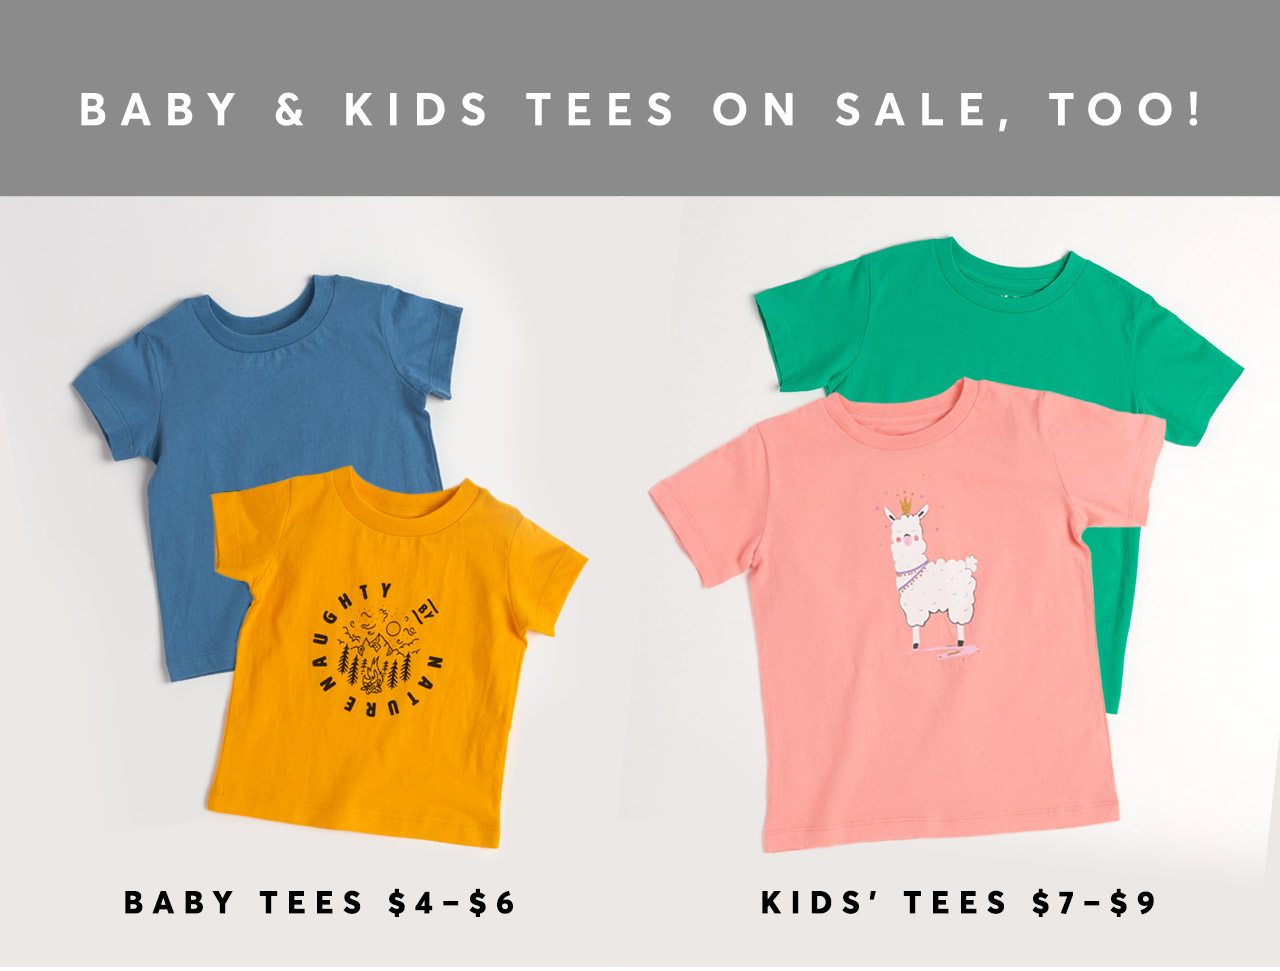 Baby & Kids Tees on sale, too!